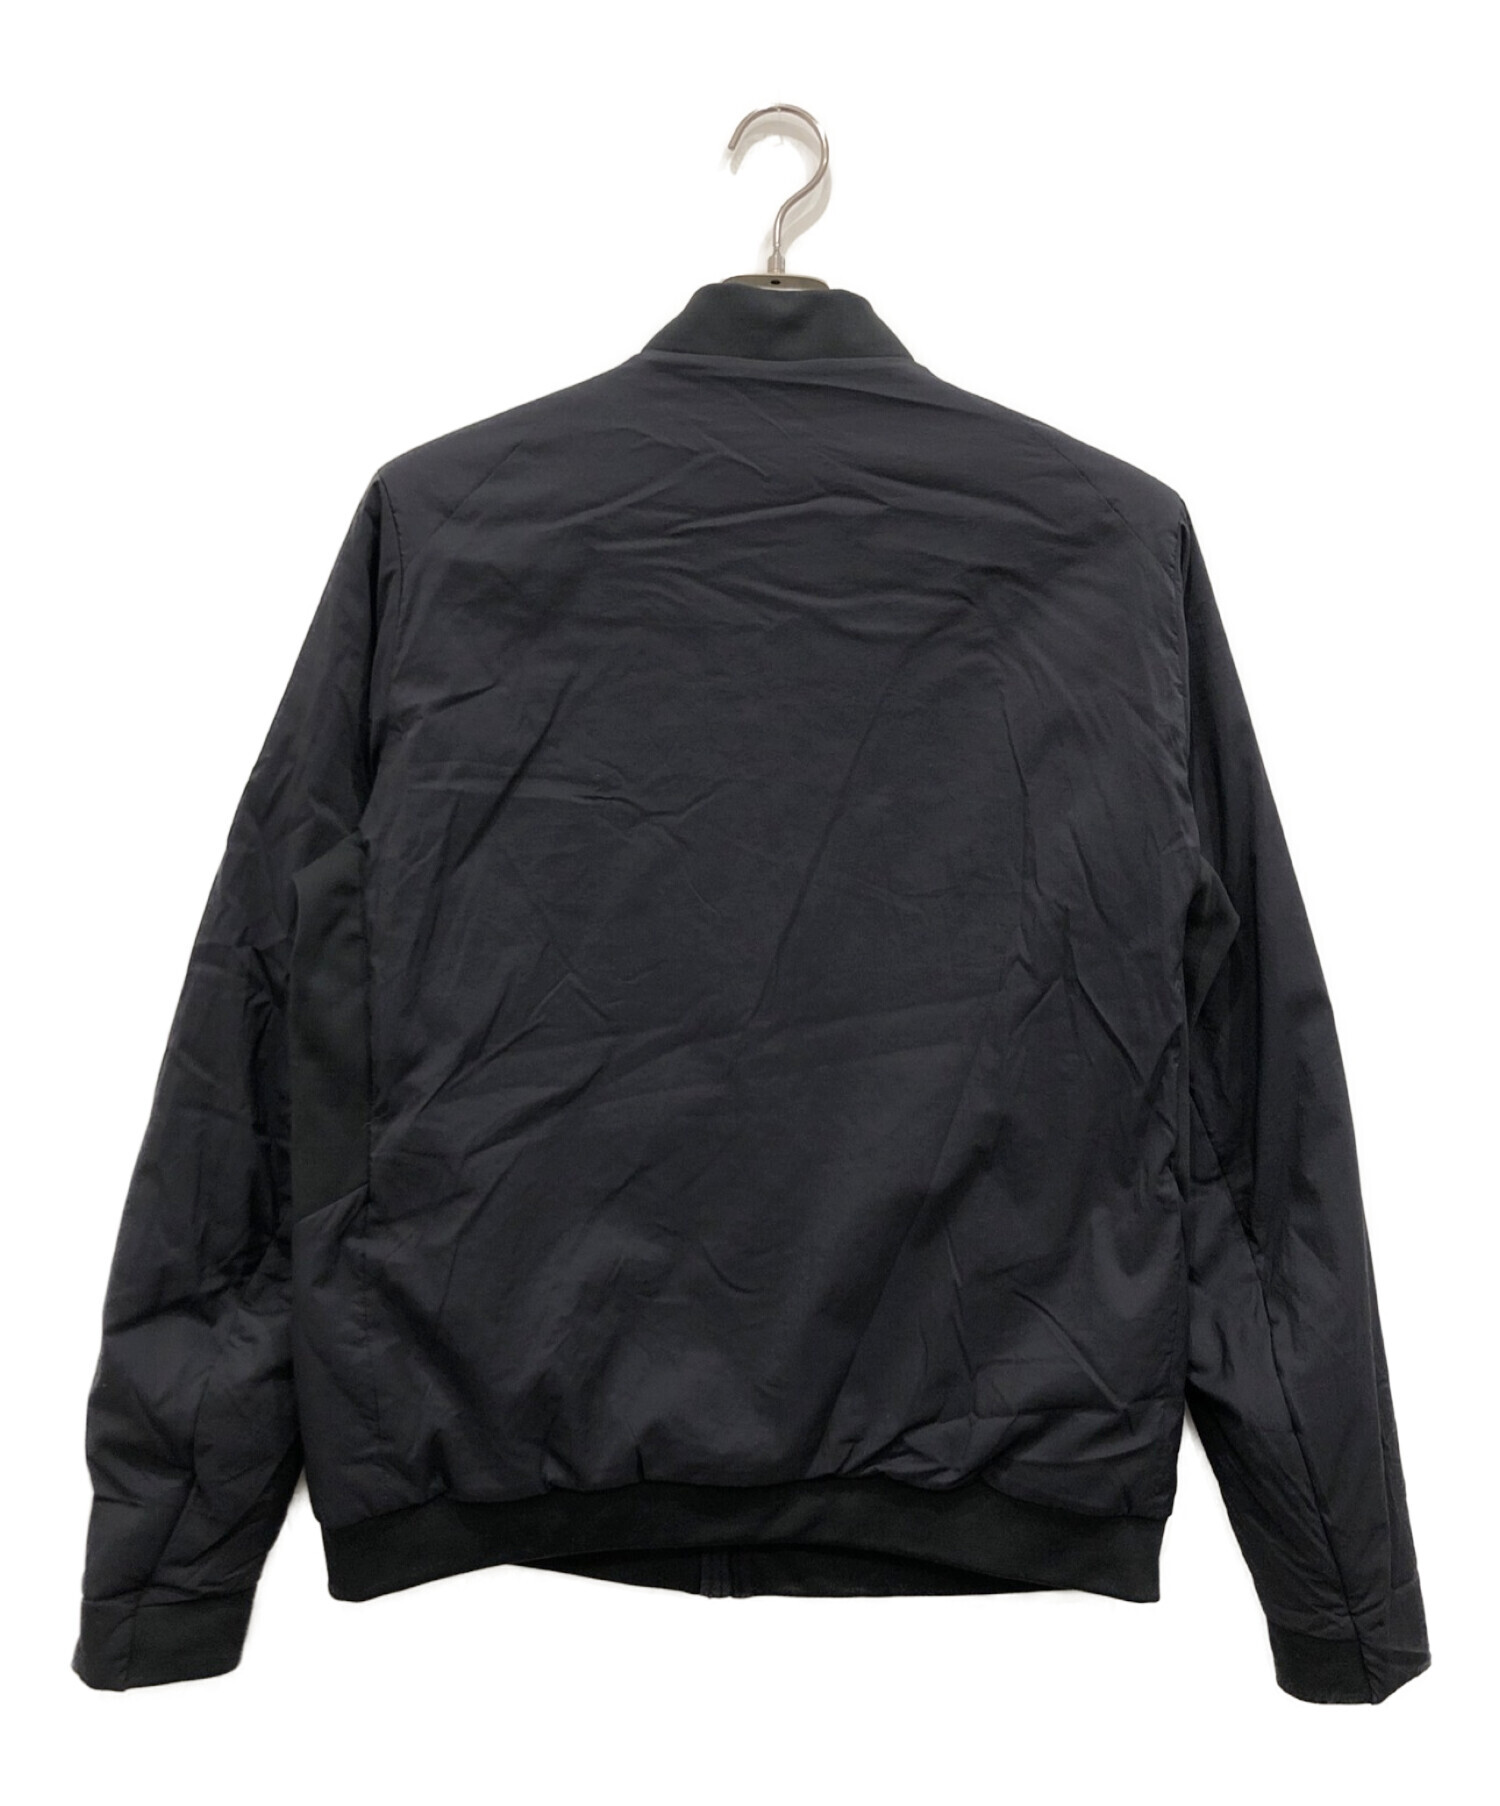 ARC'TERYX (アークテリクス) セトンジャケット ブラック サイズ:S